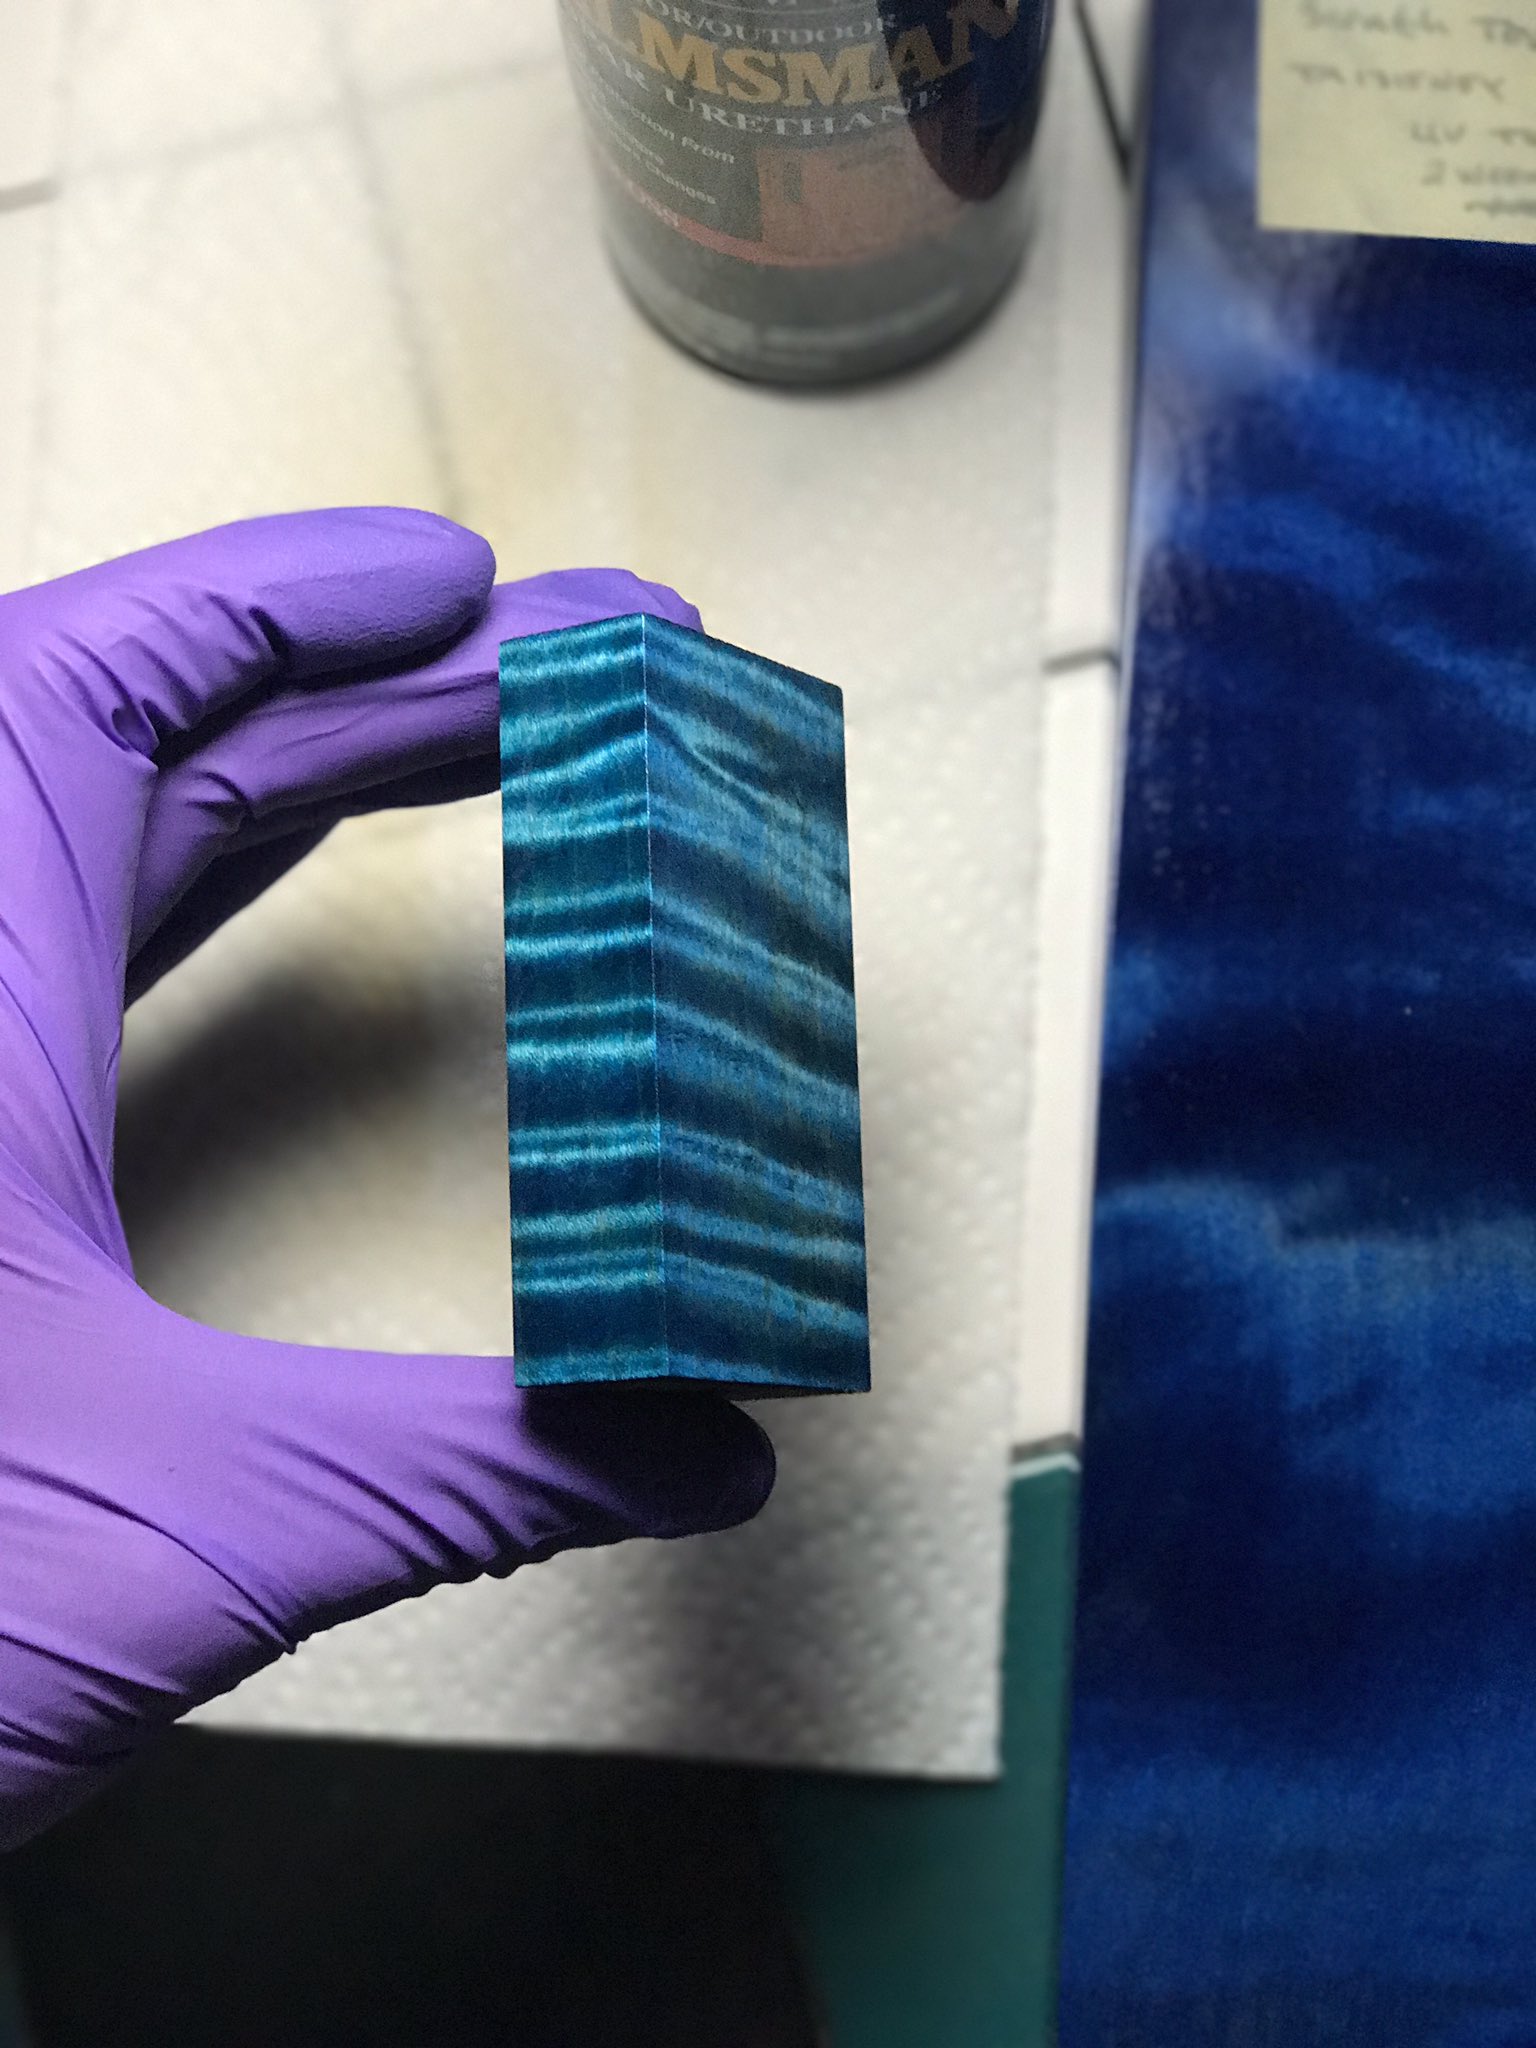 Keda Dye on X: Blue Wood Dye (Powders) 0.25grams diluted into 4